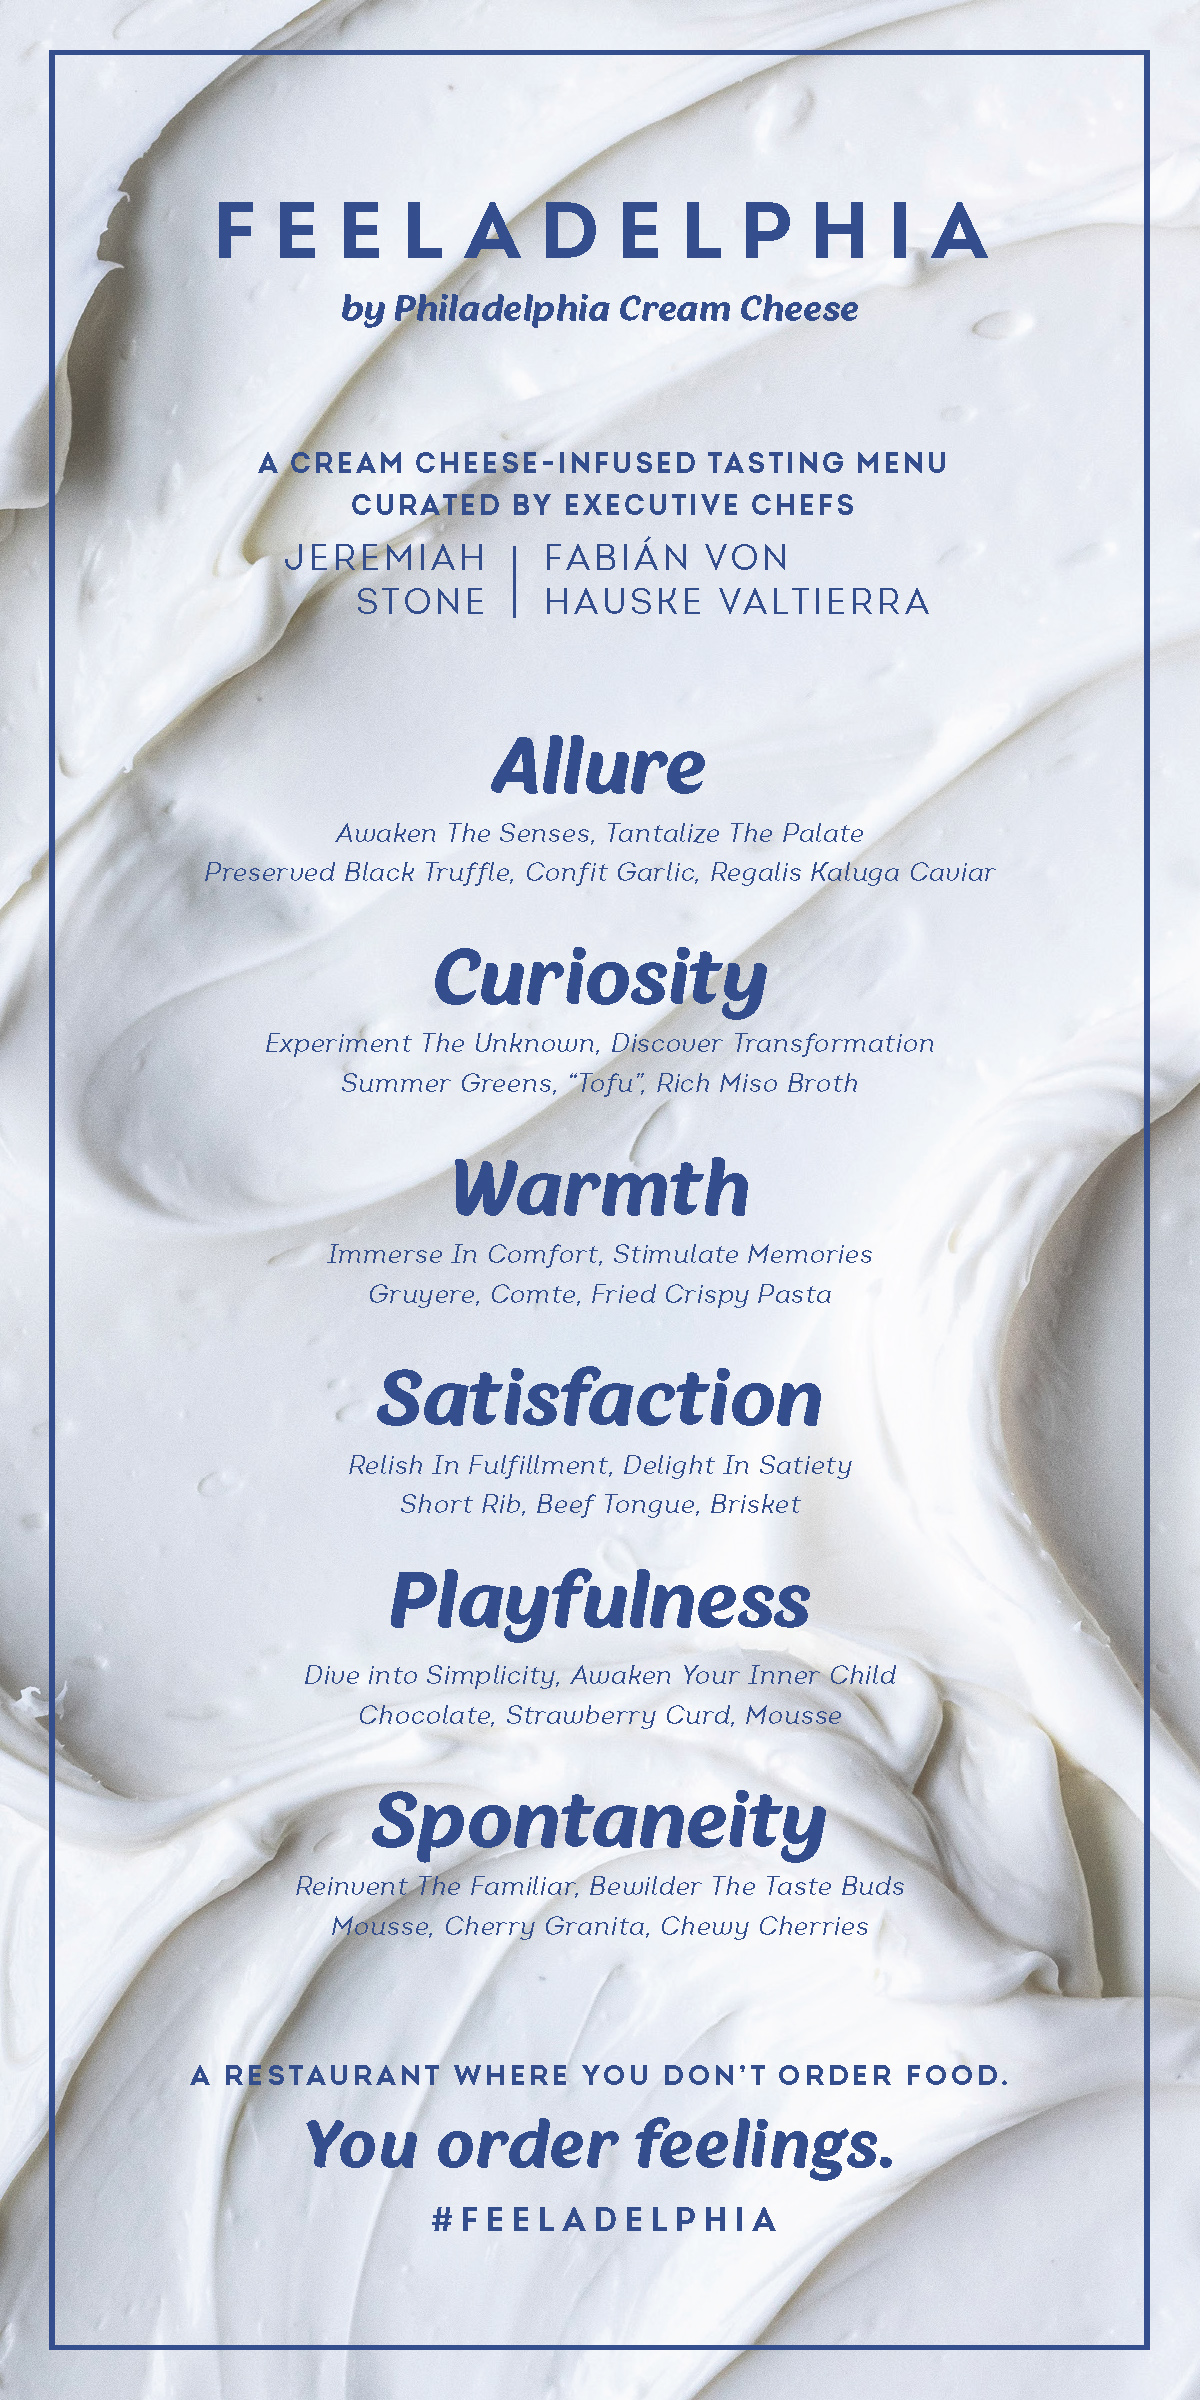 Feelings-inspired menu specially curated for Feeladelphia by Philadelphia cream cheese